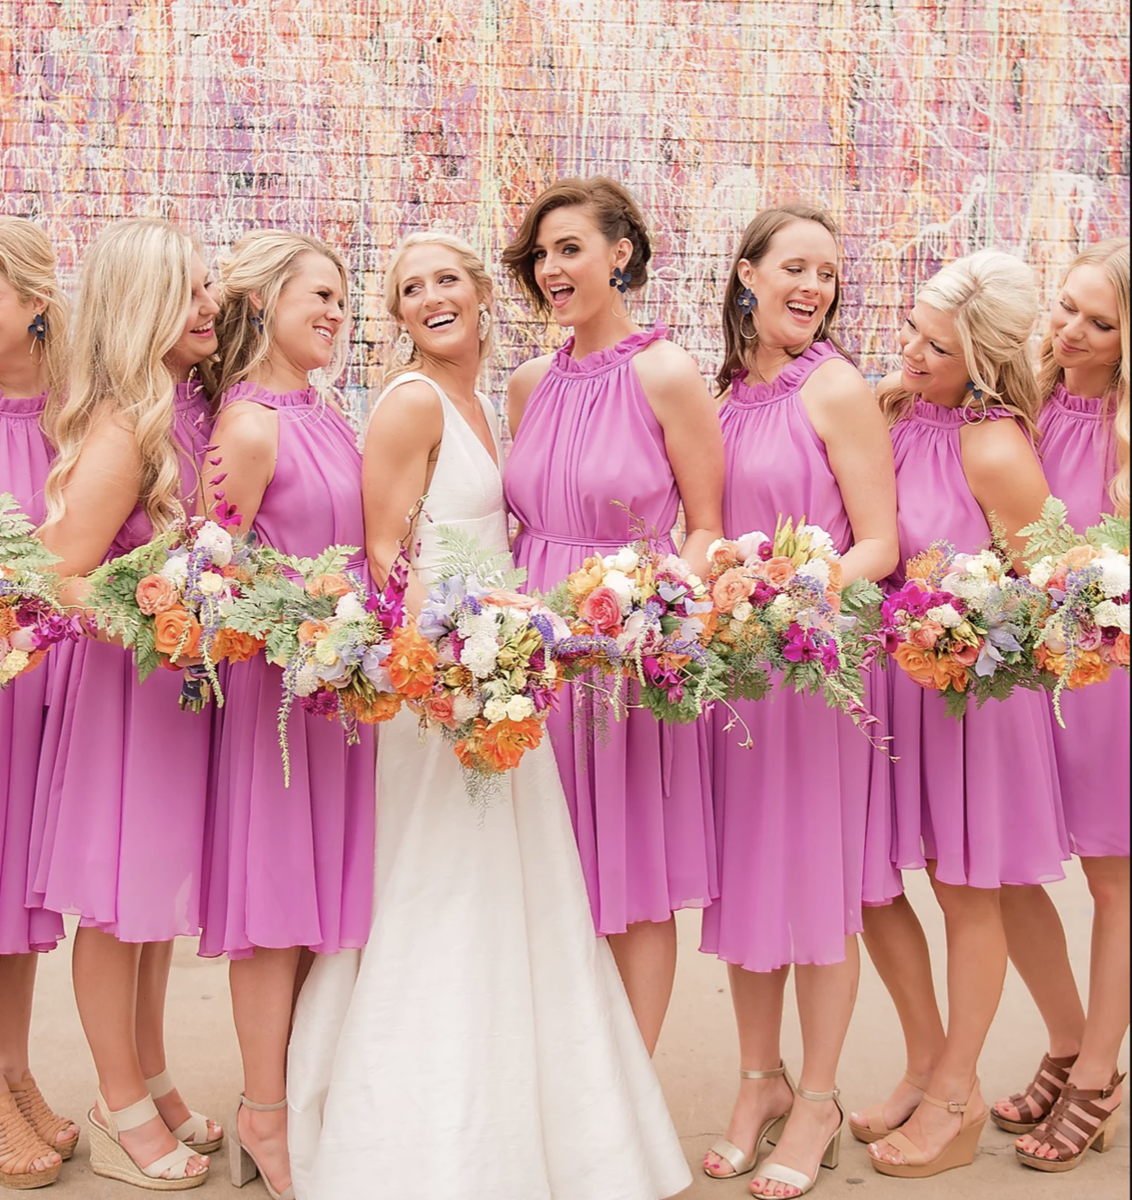 Laura Stiles Photo-BridalBuzz-San Antonio Weddings